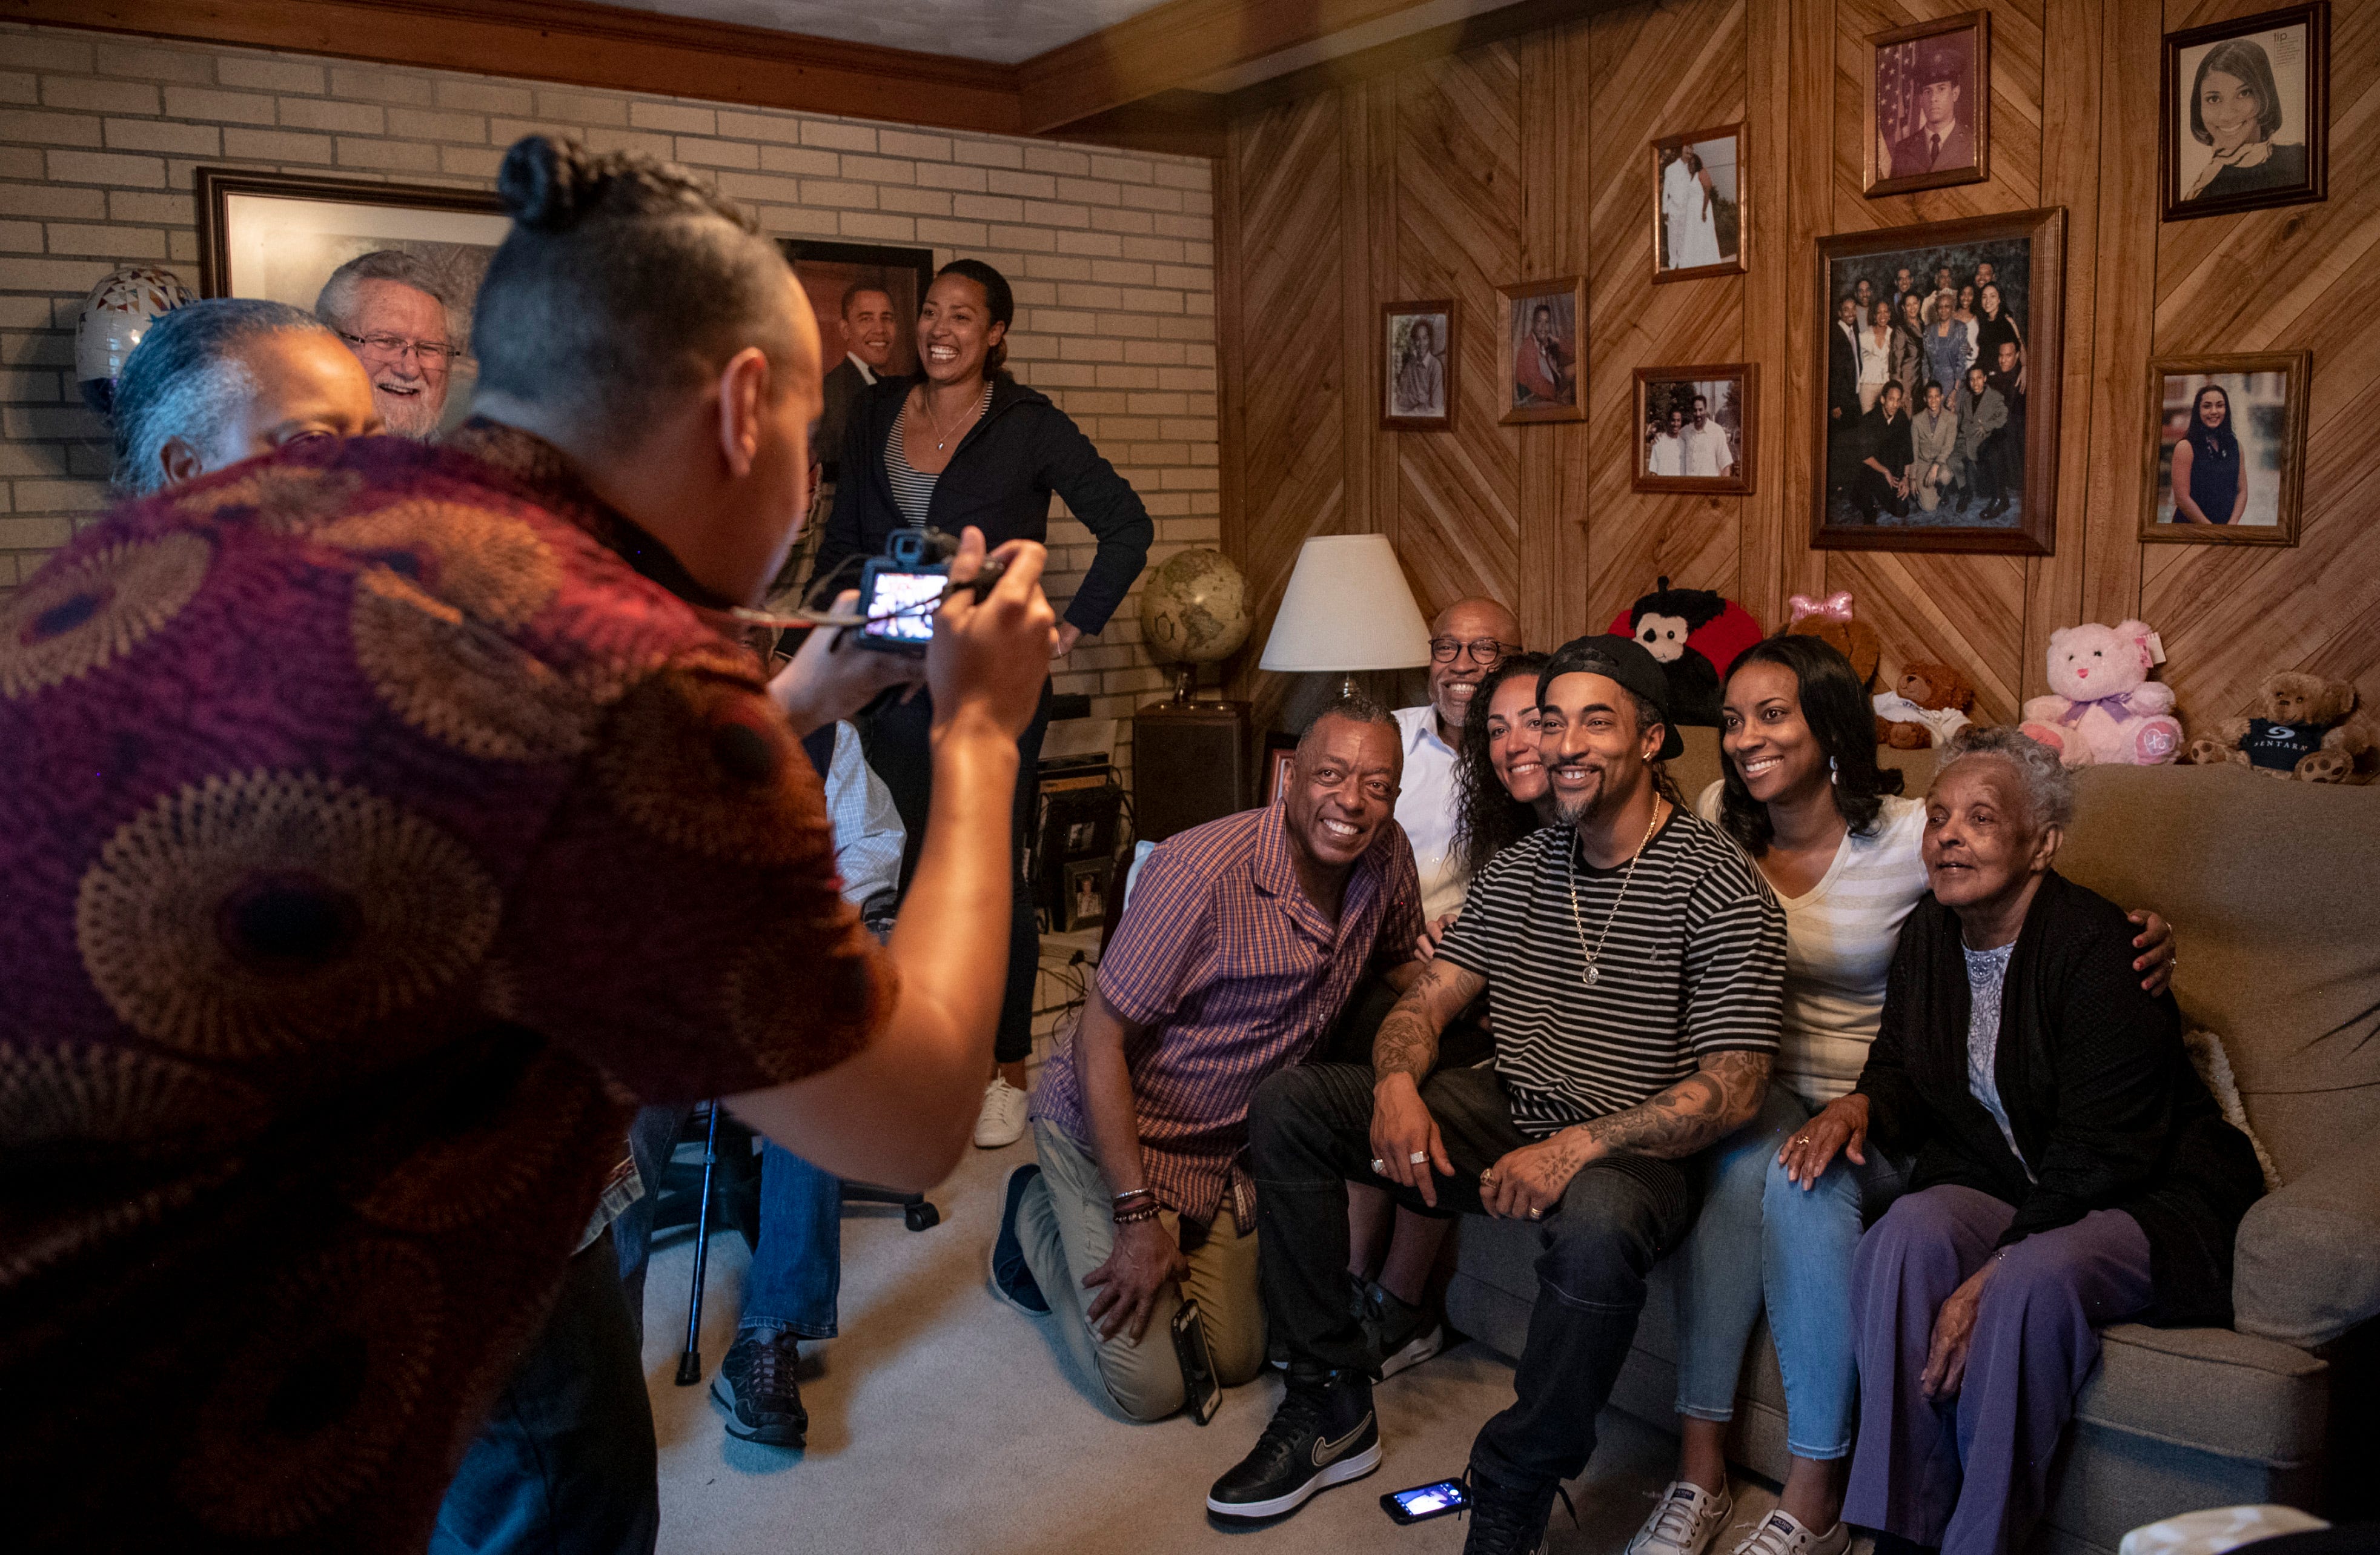 The Tucker family gather for photos during the 88th birthday of Carol Tucker Jones in Hampton, Va. on Sunday, March 31, 2019.